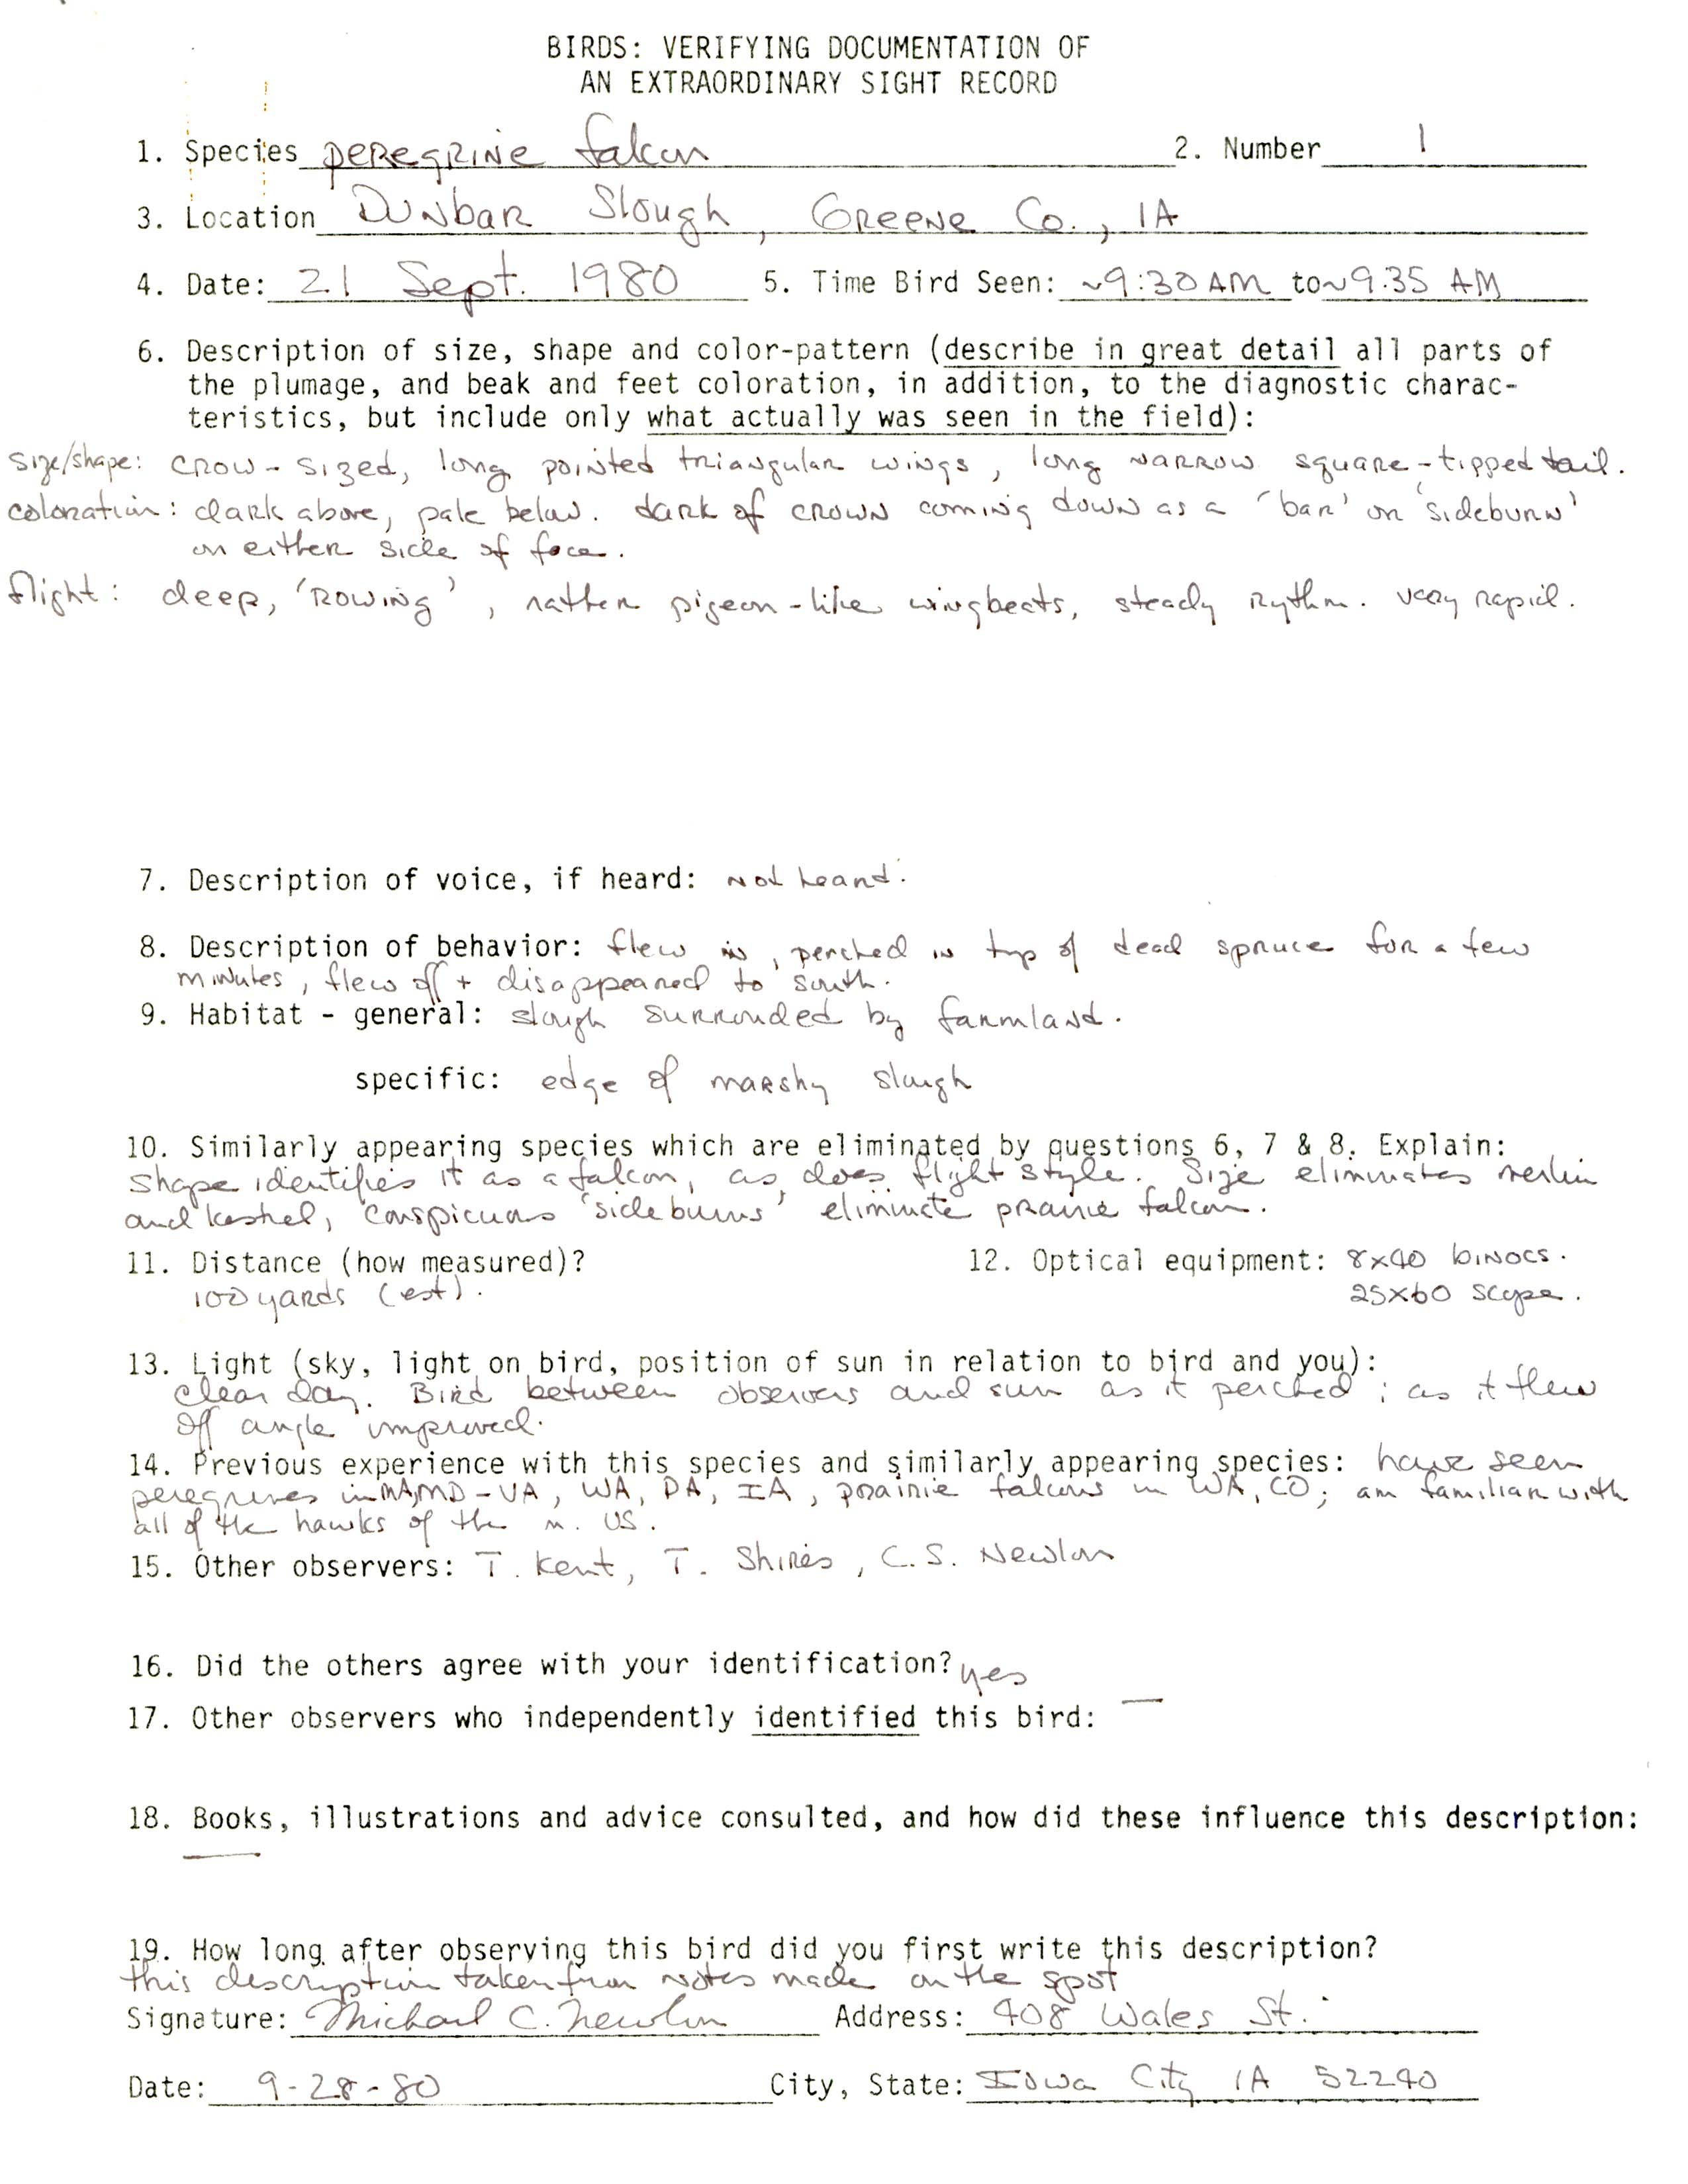 Rare bird documentation form for Peregrine Falcon at Dunbar Slough, 1980